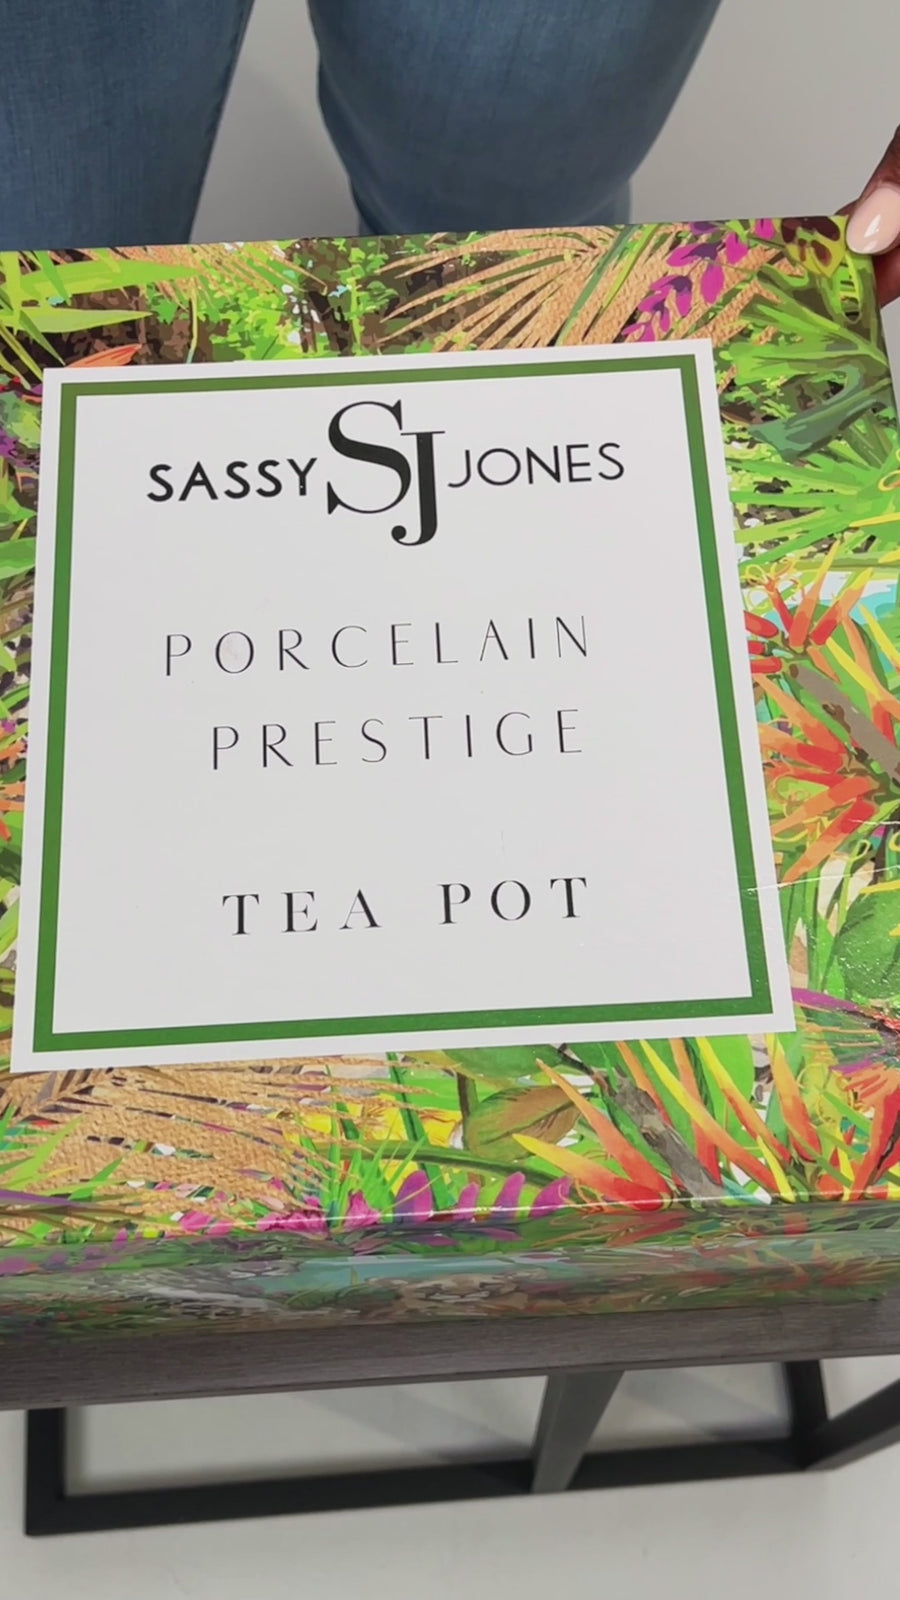 Porcelain Prestige Tea Pot - Congo